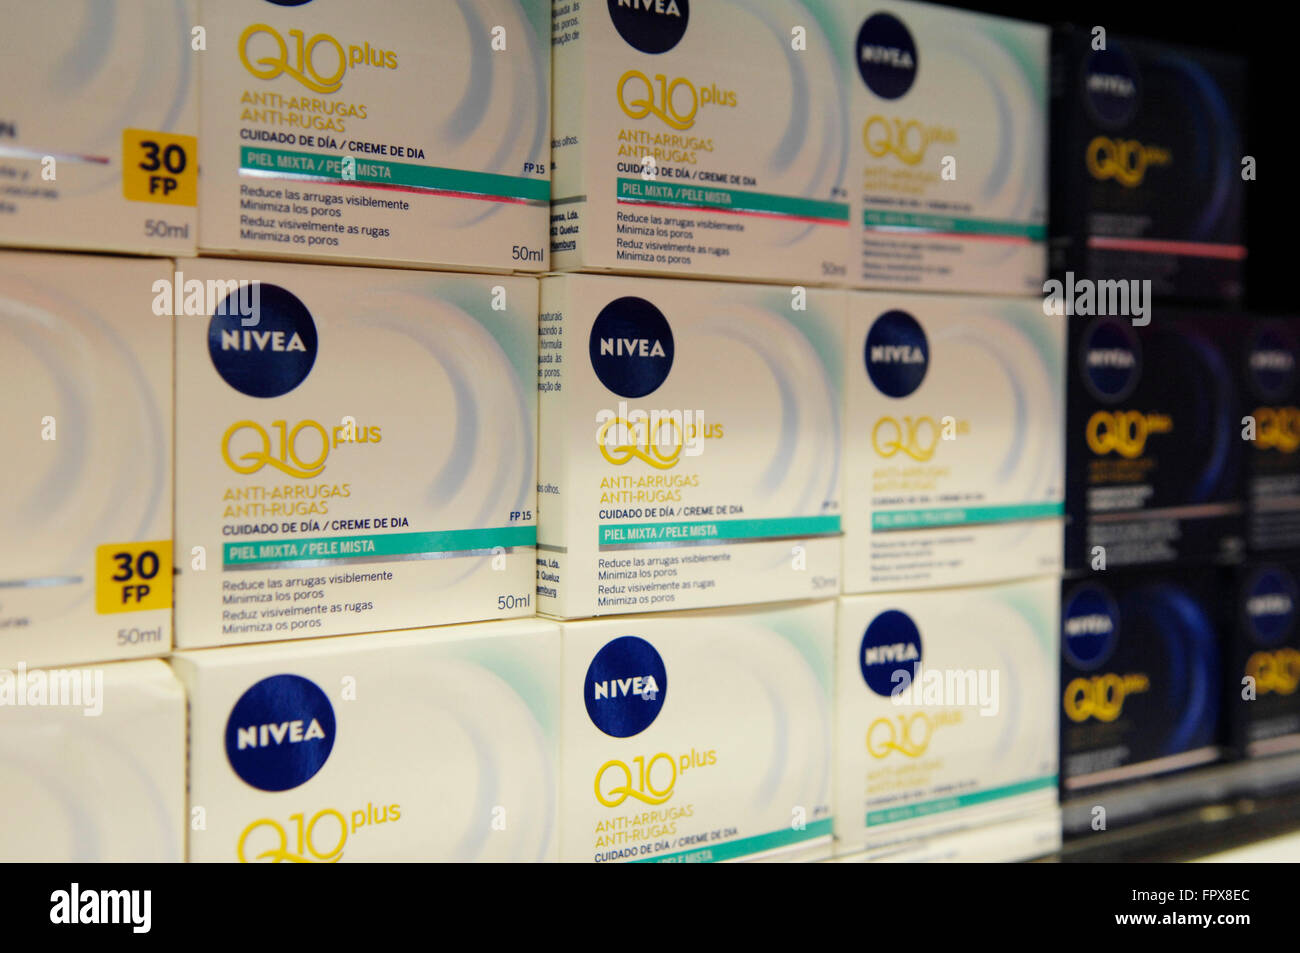 NIVEA Q10 Plus ANTI-WRINKLE Day Cream on display in a Carrefour supermarket Malaga Spain. Stock Photo